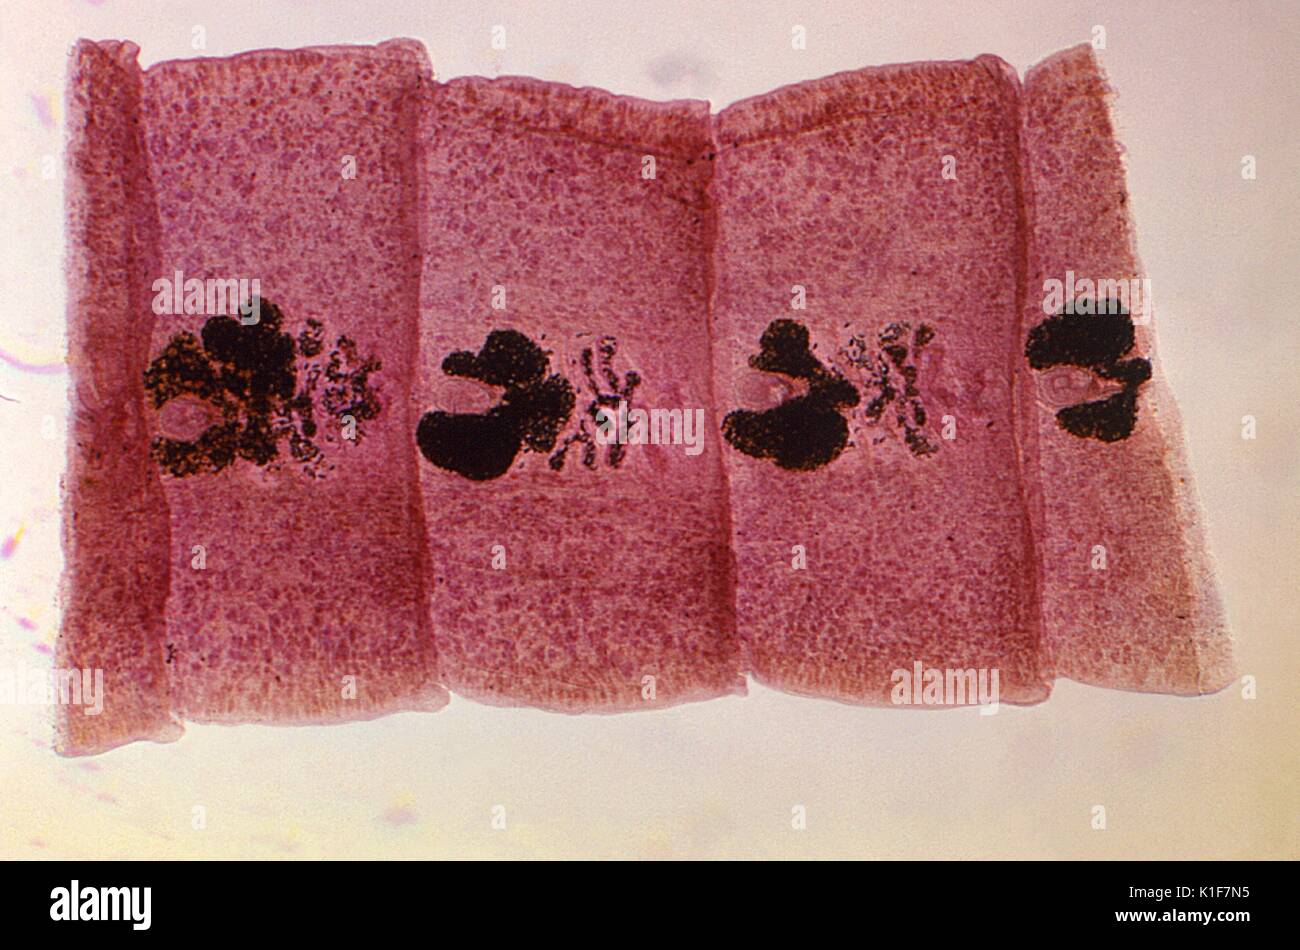 Gravid proglottids of Diphyllobothrium latum . Cestode, tapeworm, parasite. Image courtesy CDC/Dr. Mae Melvin, 1979. Stock Photo